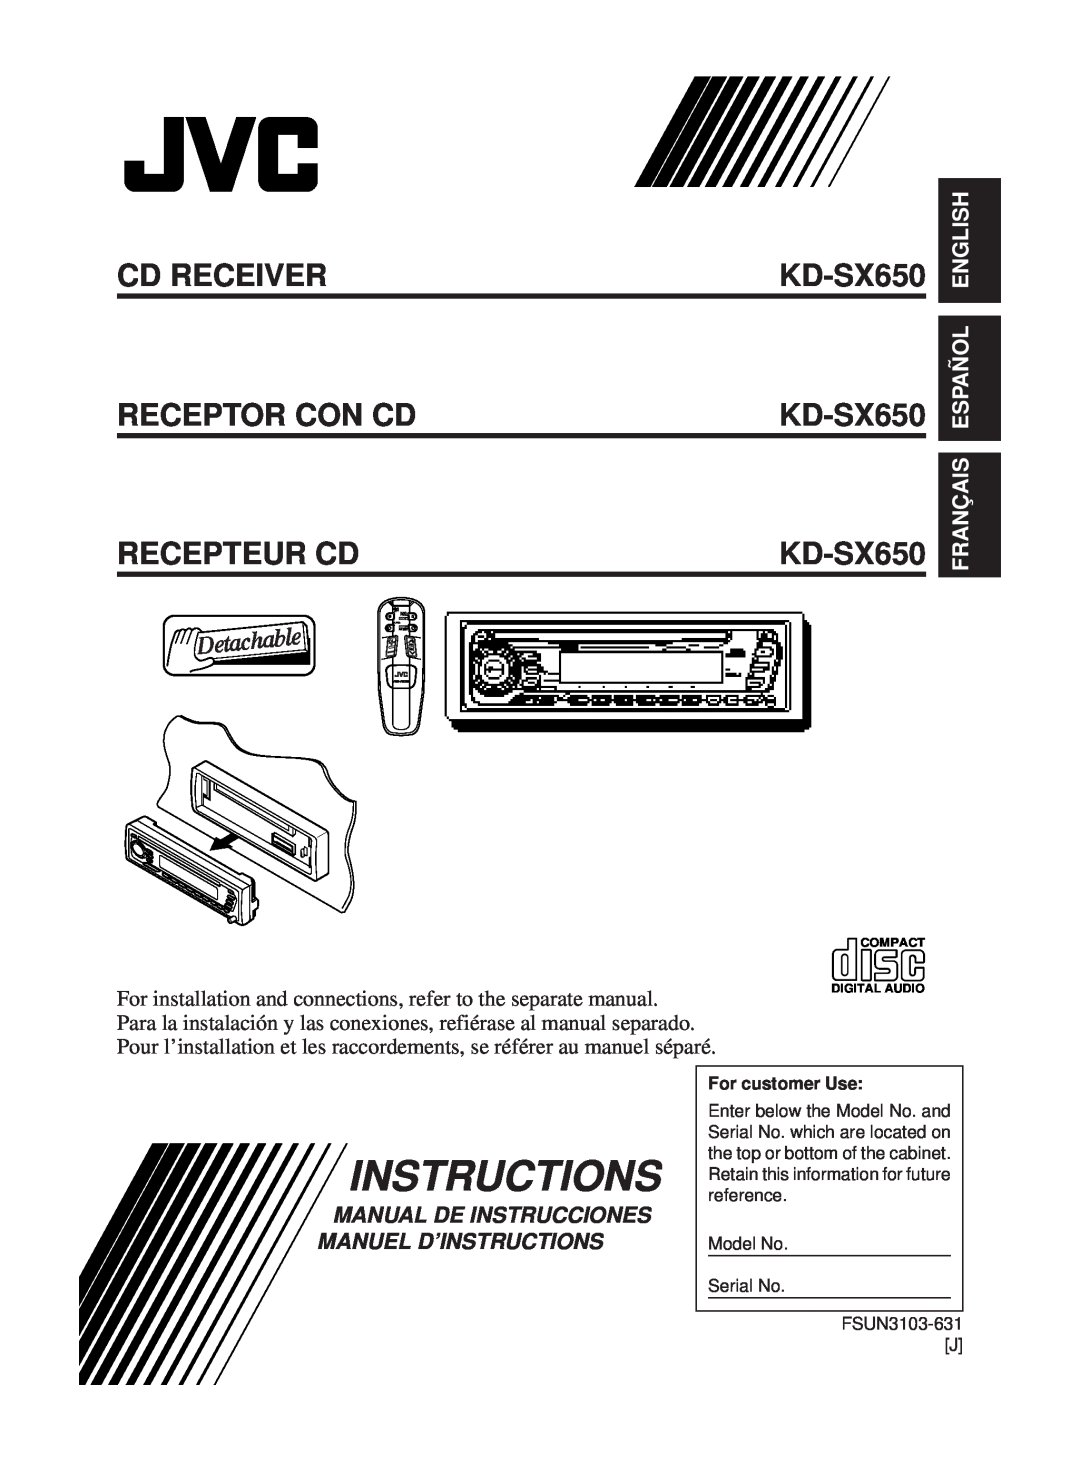 JVC KD-SX650 manual Instructions, English, Español, Français, Cd Receiver Receptor Con Cd Recepteur Cd 